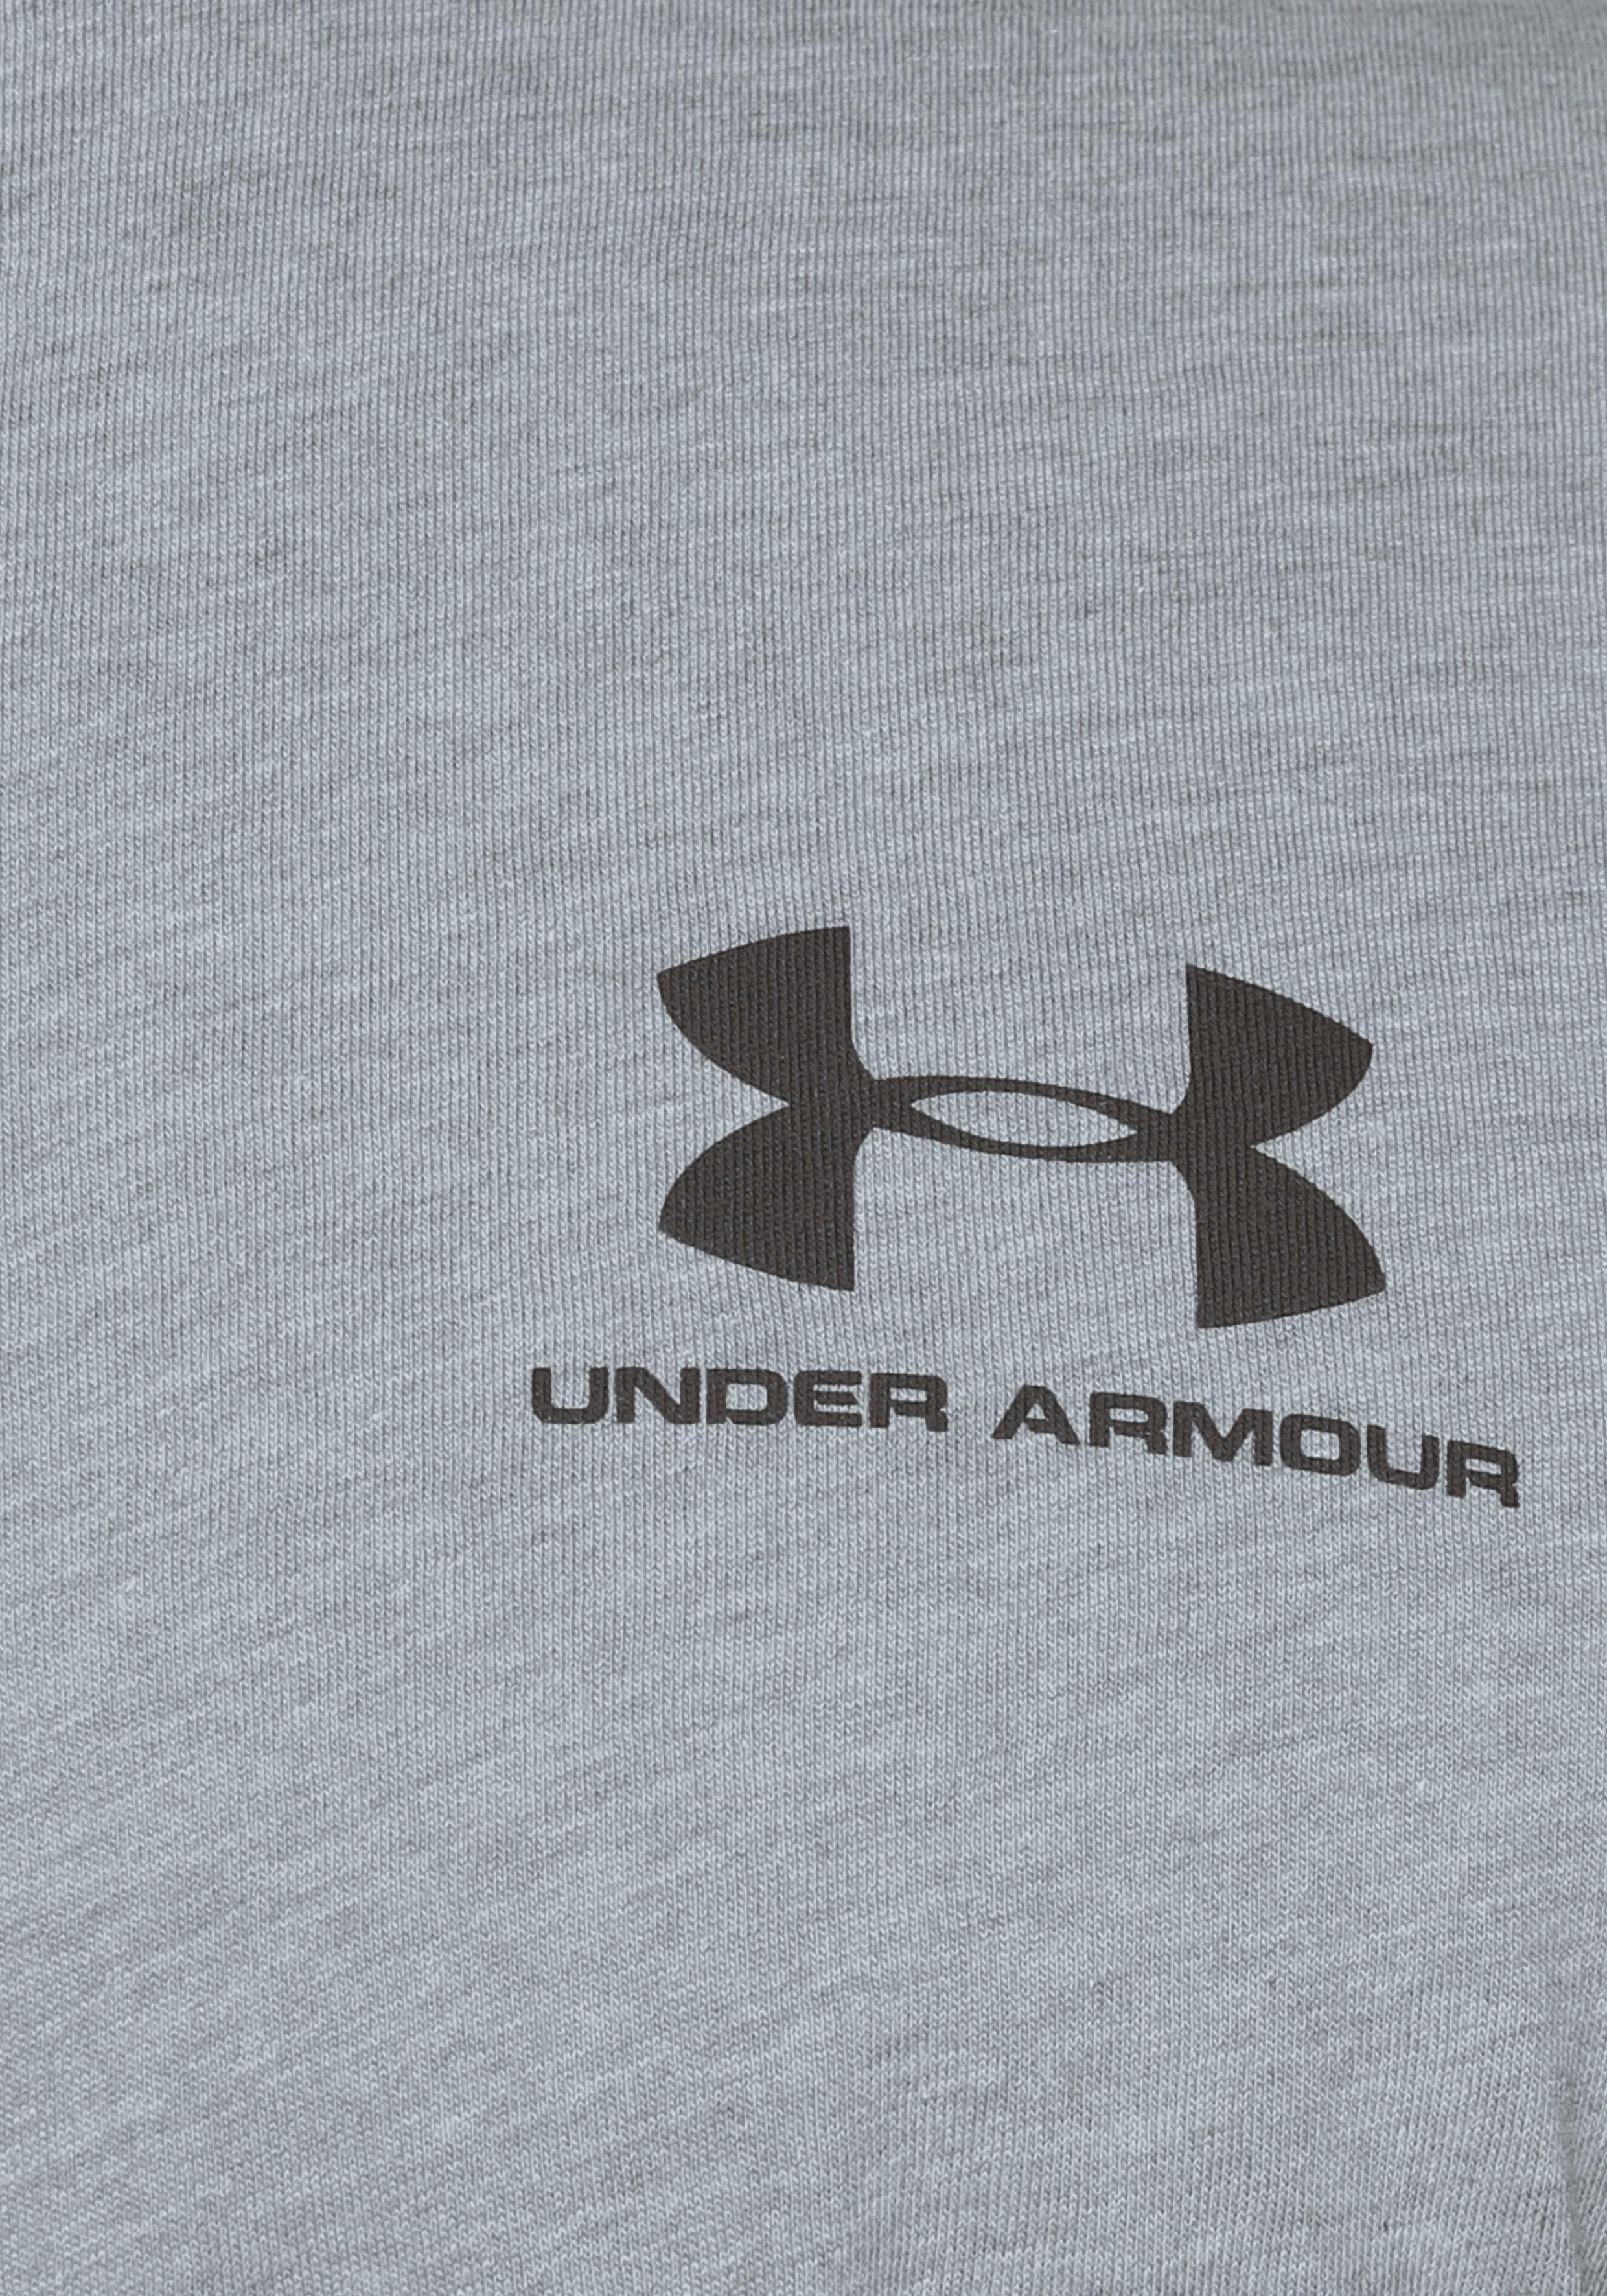 LC Armour® SPORTSTYLE SHORT SLEEVE UA T-Shirt Under grau